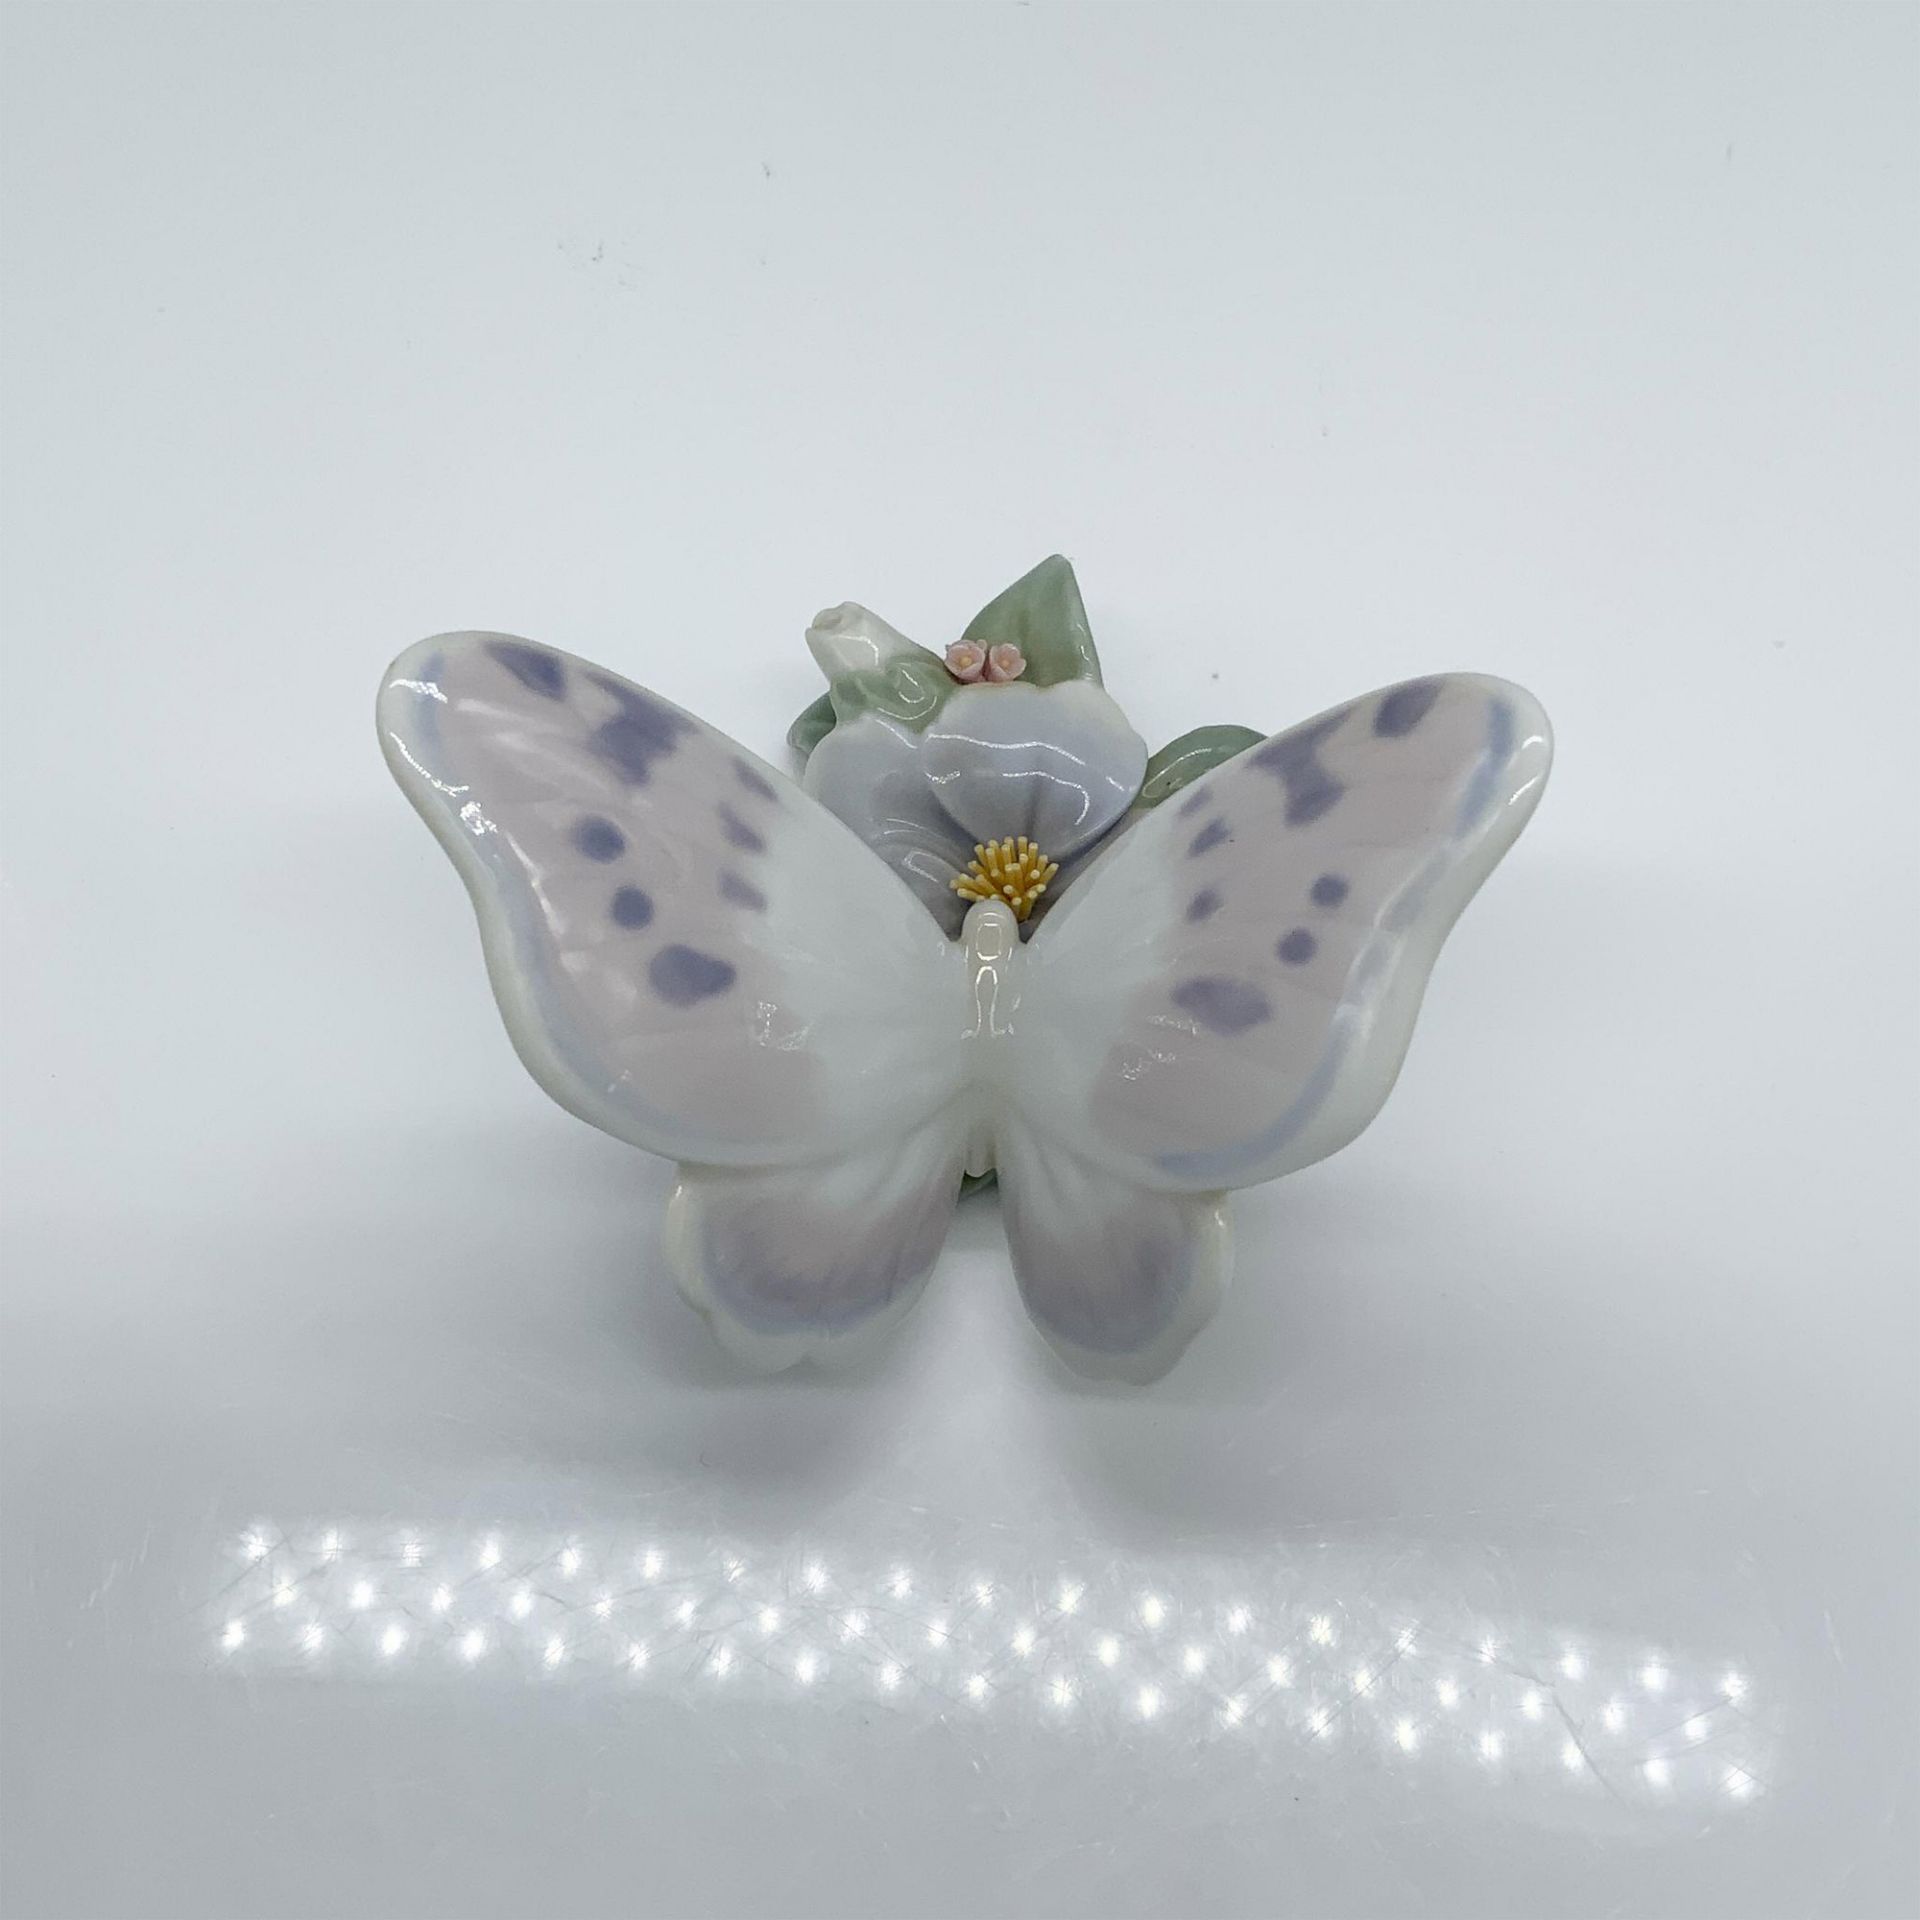 Refreshing Pause 1006330 - Lladro Porcelain Figurine - Image 2 of 4